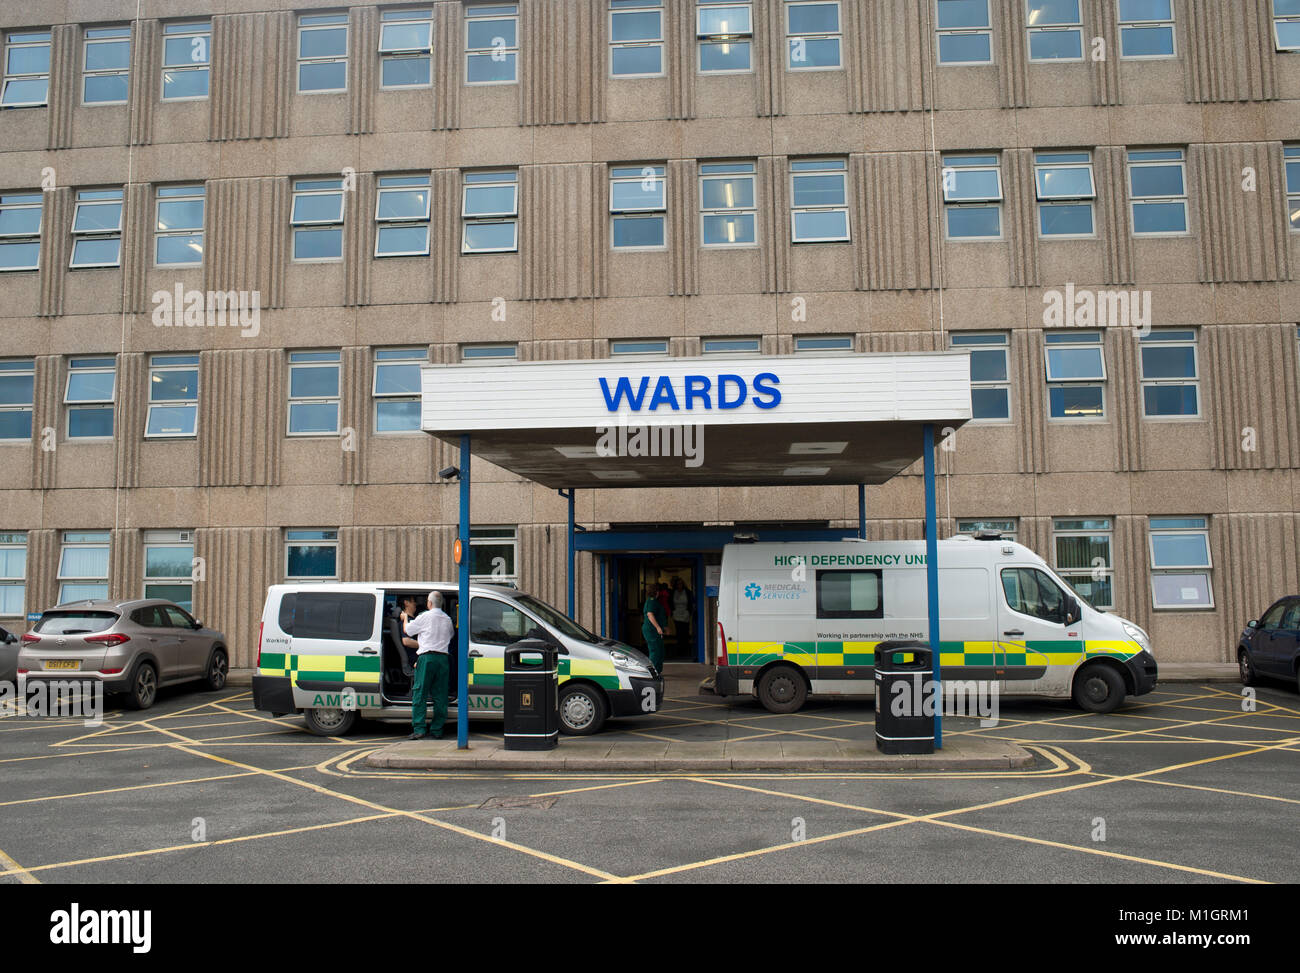 Two ambulances are parked outside Shrewsbury NHS hospital under a sign saying Wards Stock Photo